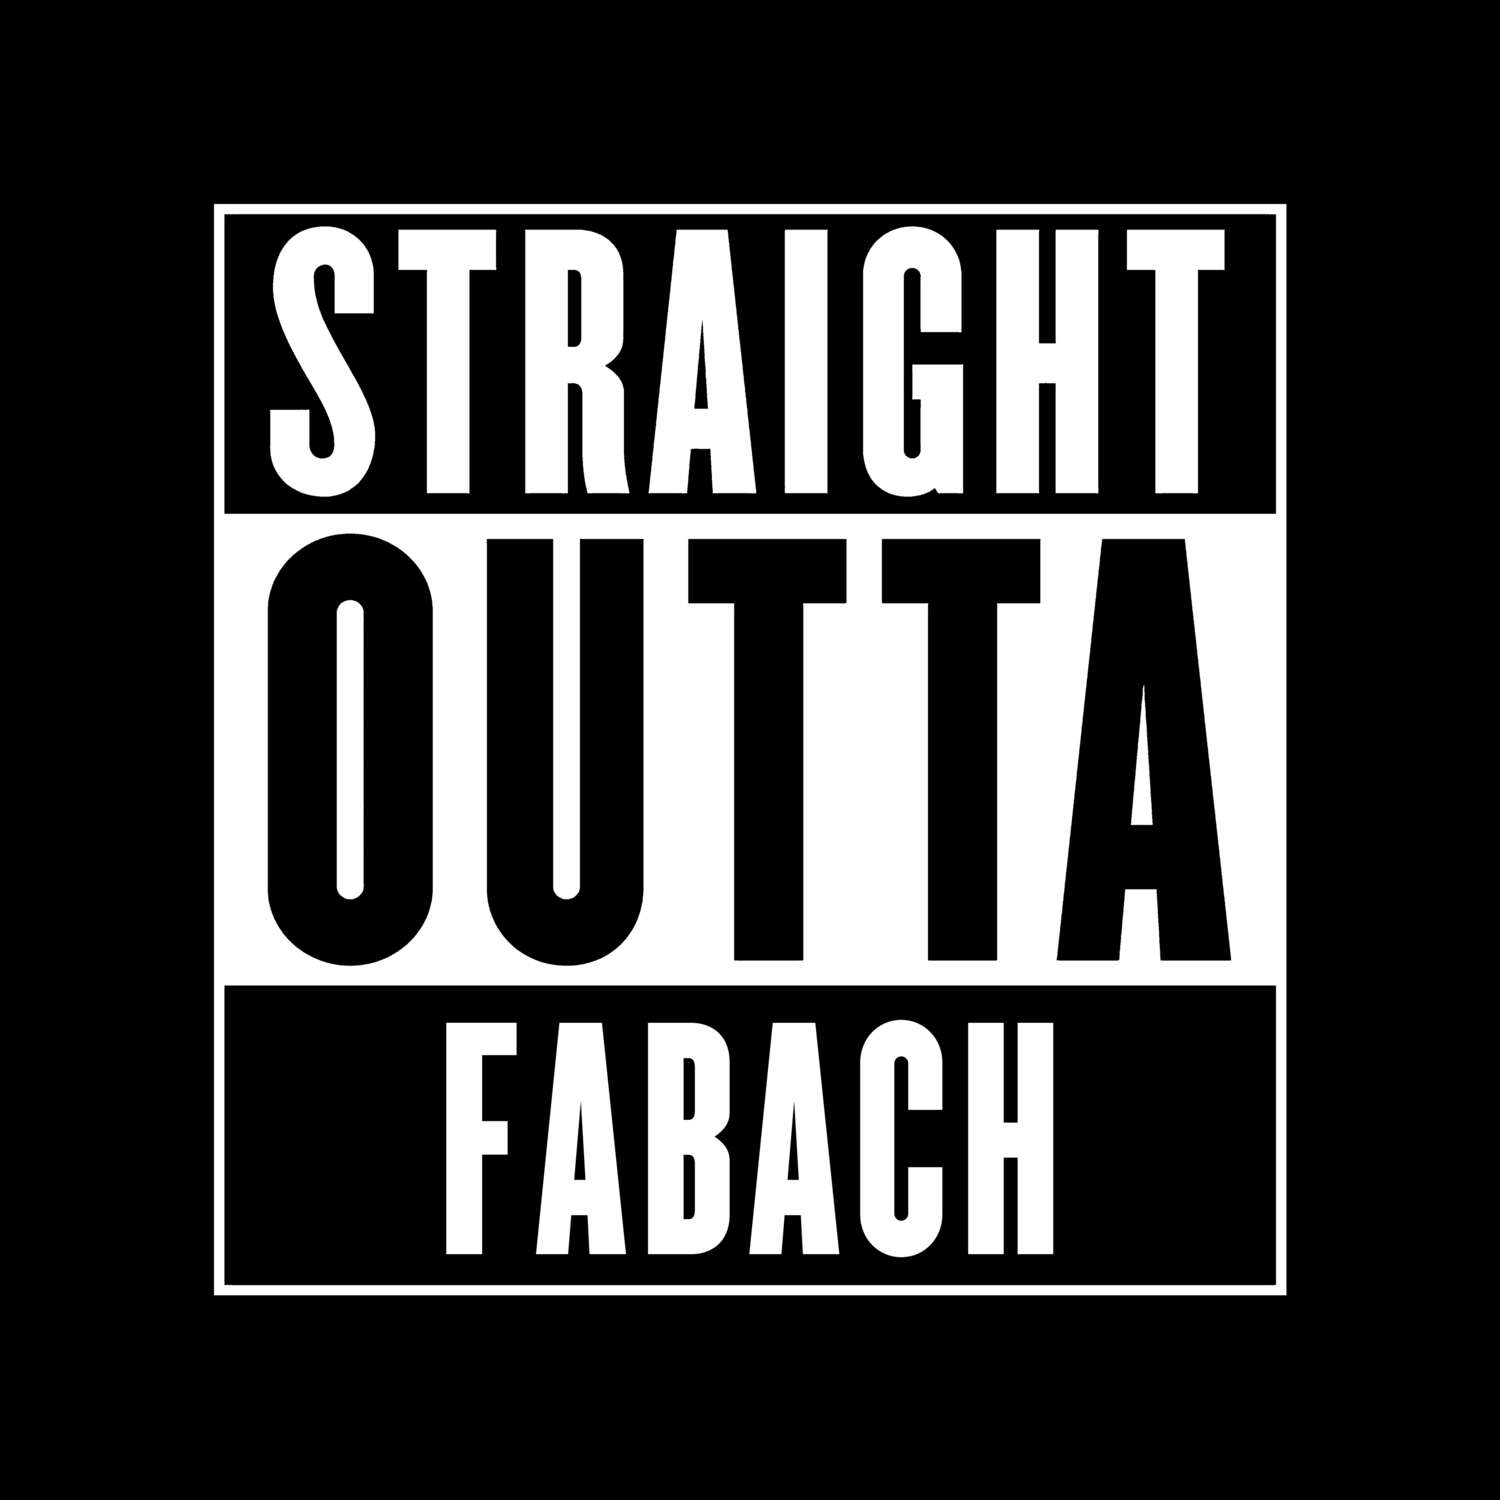 Fabach T-Shirt »Straight Outta«